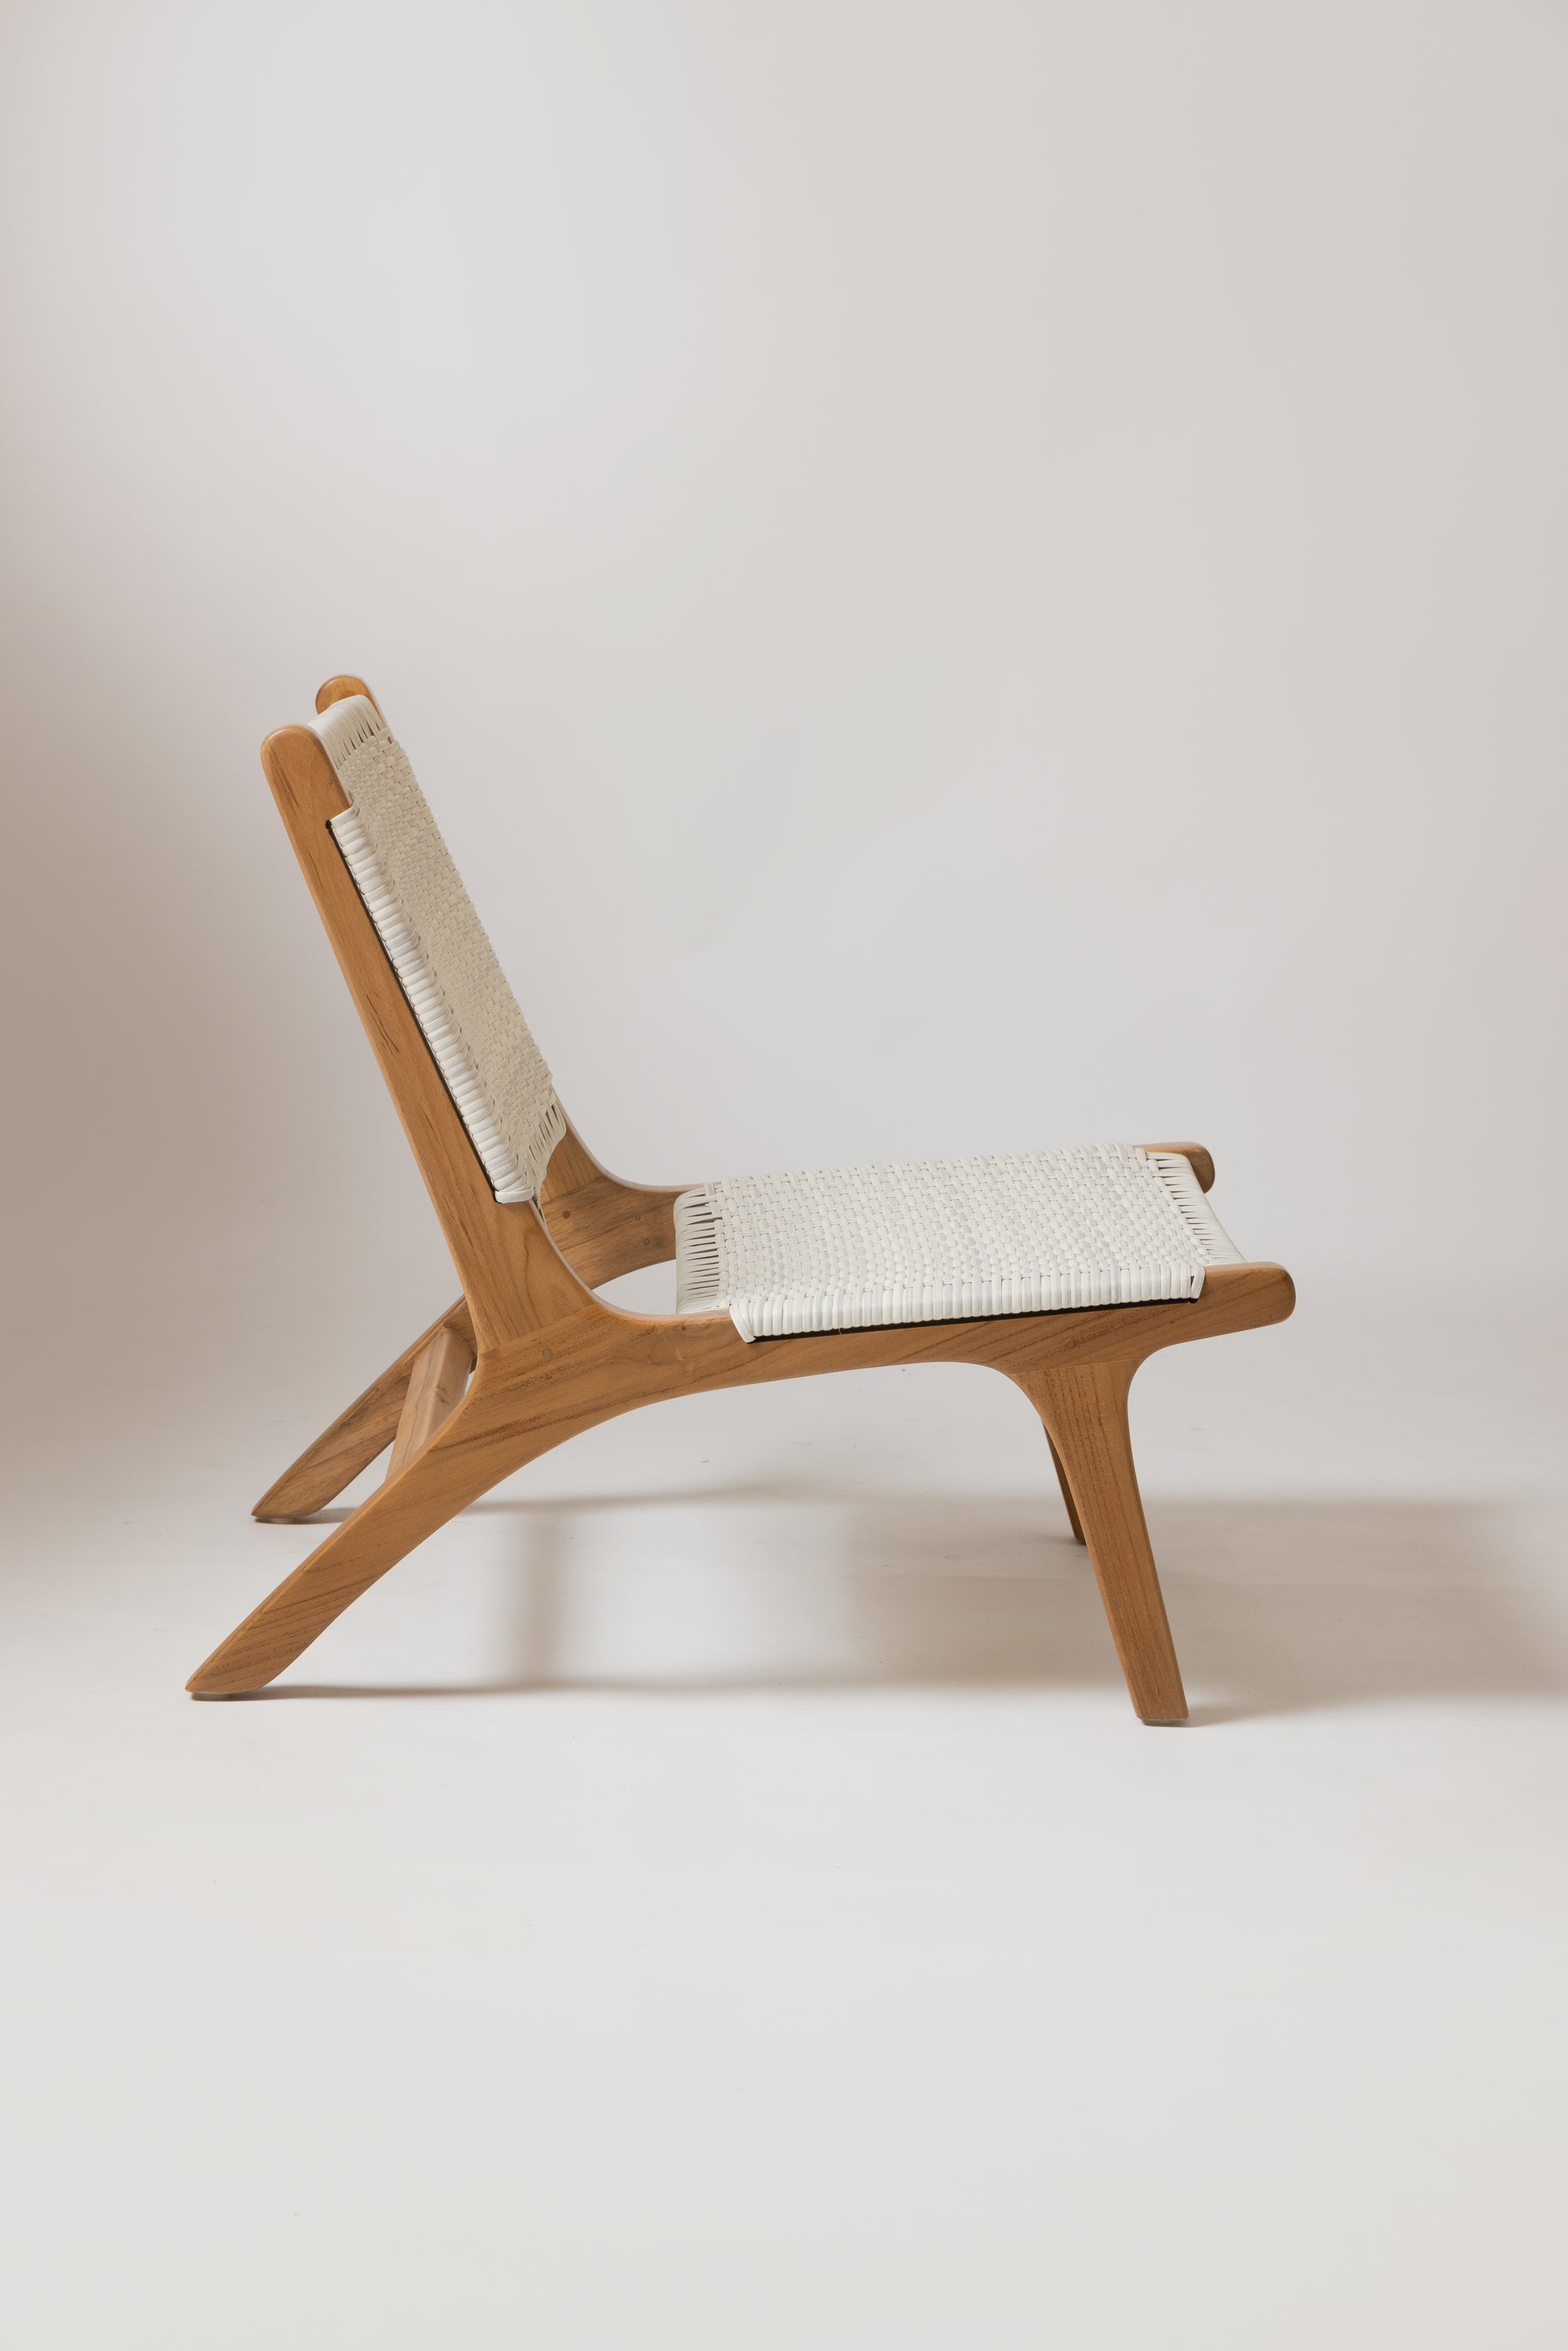 Astor chair